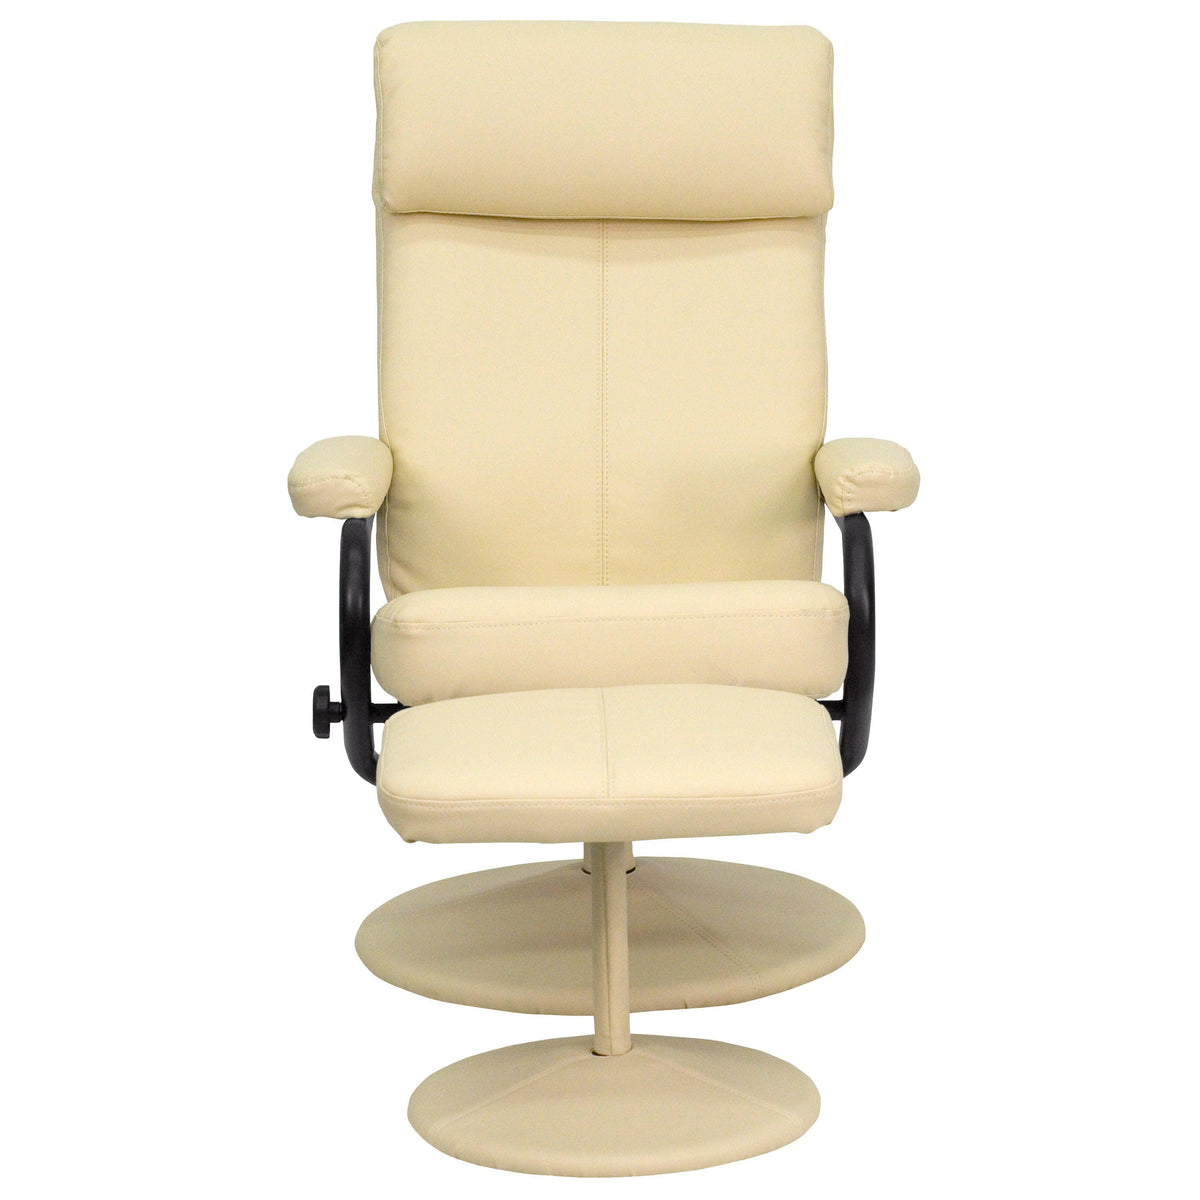 Cream |#| Contemporary Multi-Position Headrest Recliner and Ottoman in Cream LeatherSoft